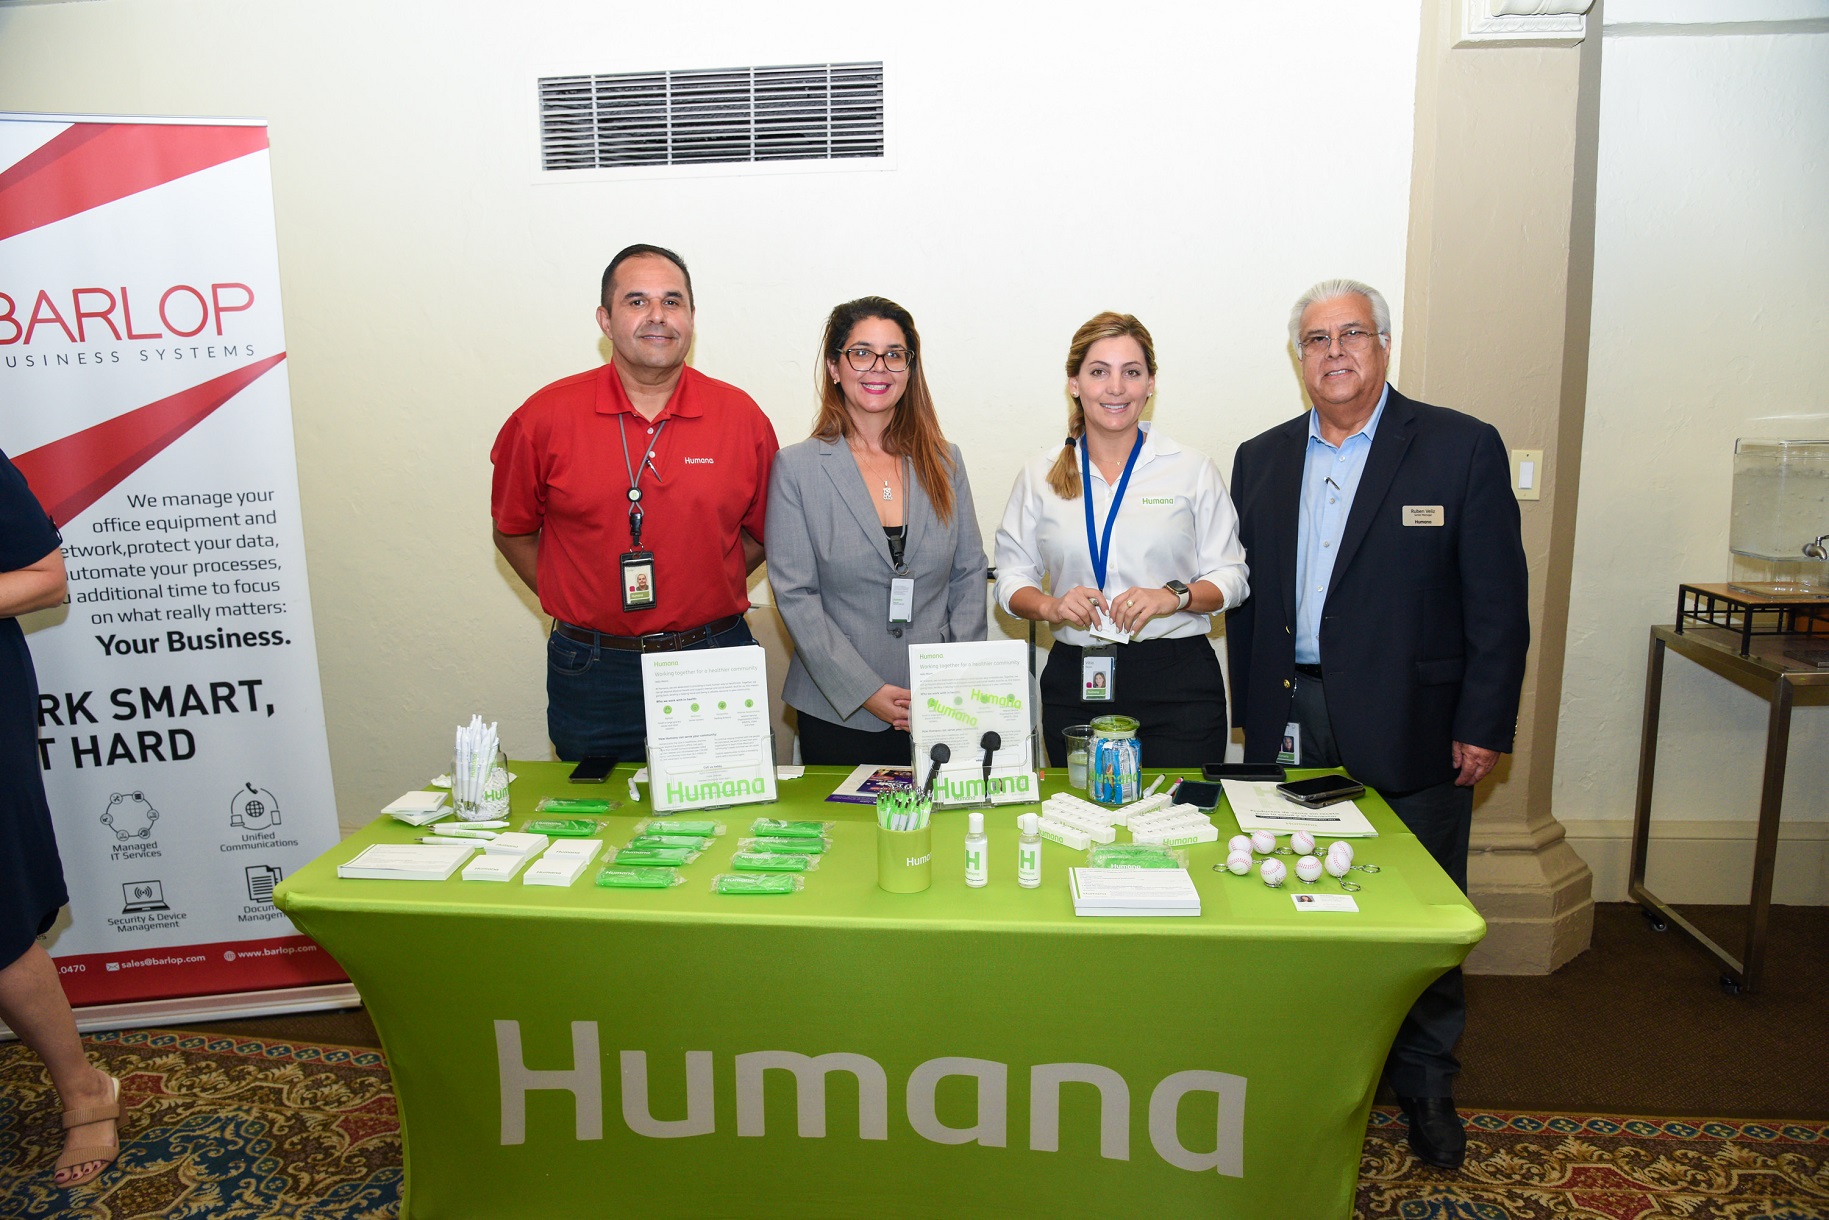 Viva Miami Hispanic Heritage Expo and Business Conference. 